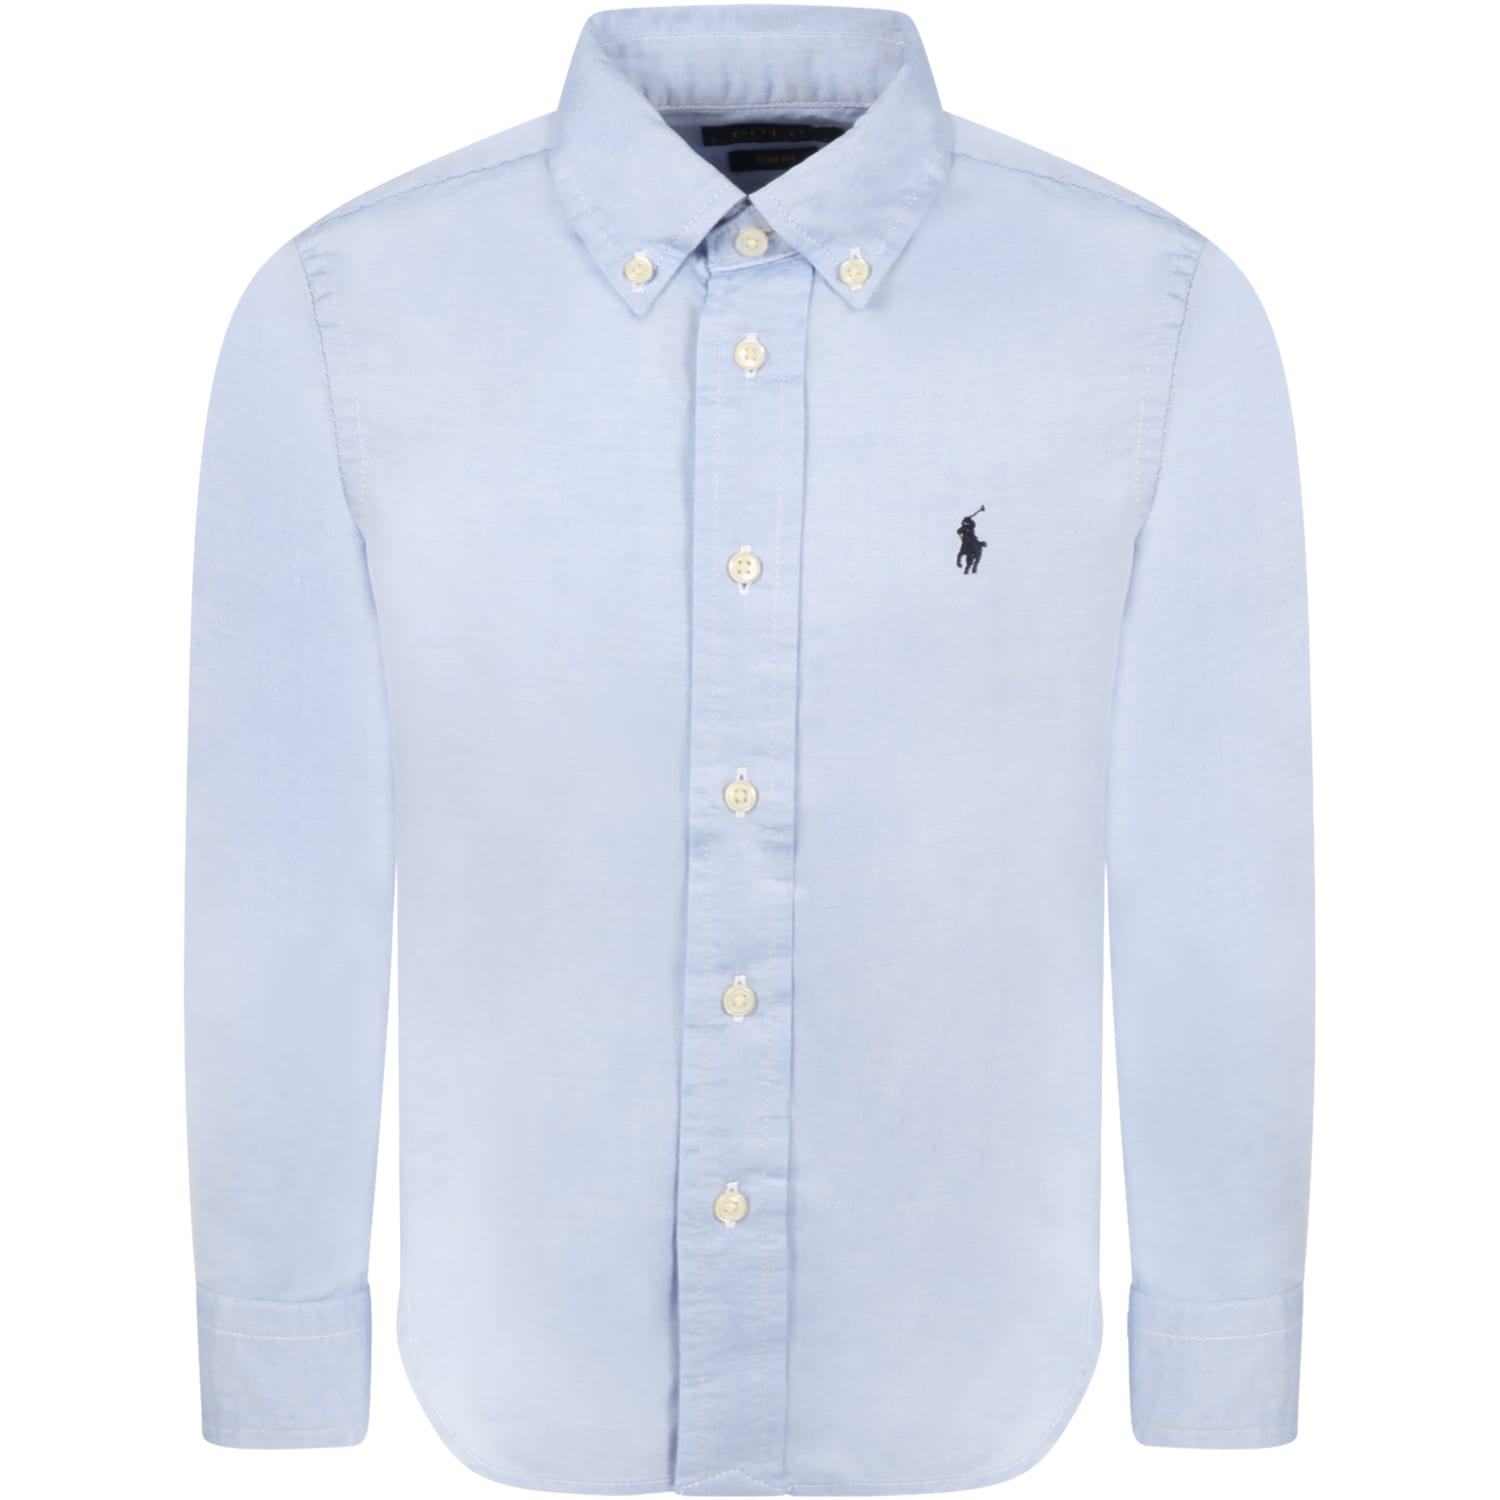 Ralph Lauren Light Blue Shirt For Boy With Pony Logo